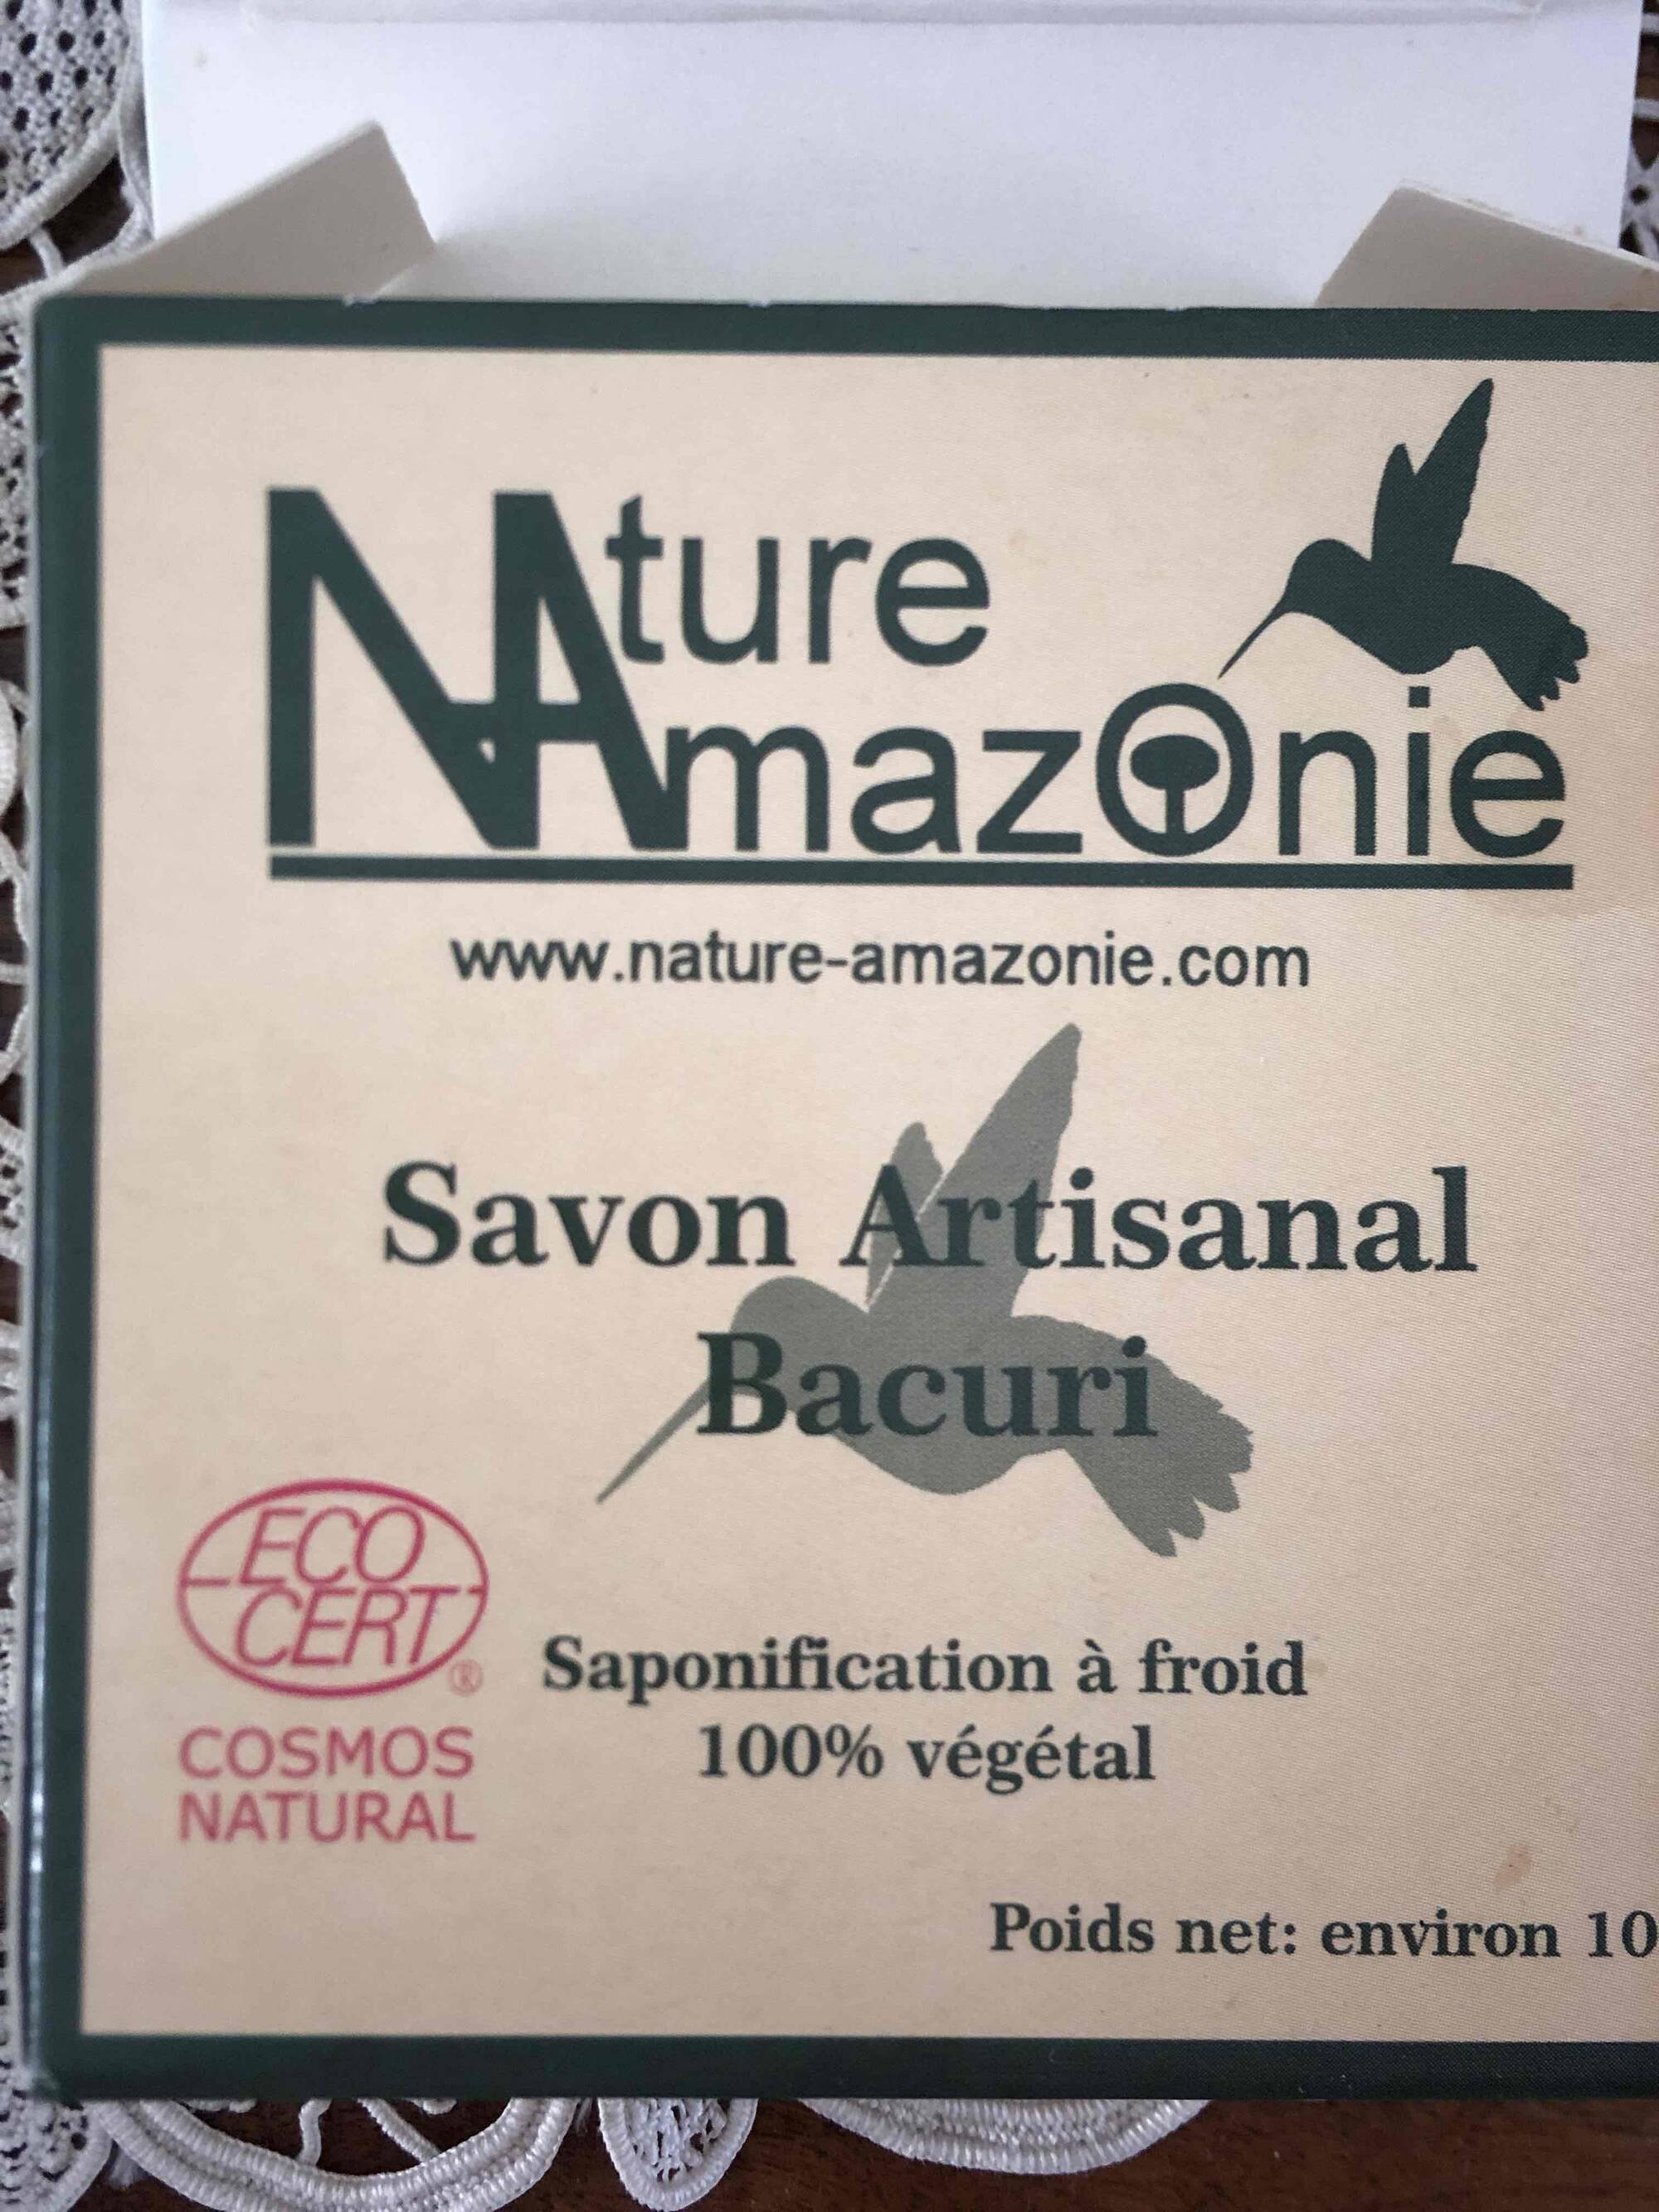 NATURE AMAZONIE - Savon artisanal bacuri